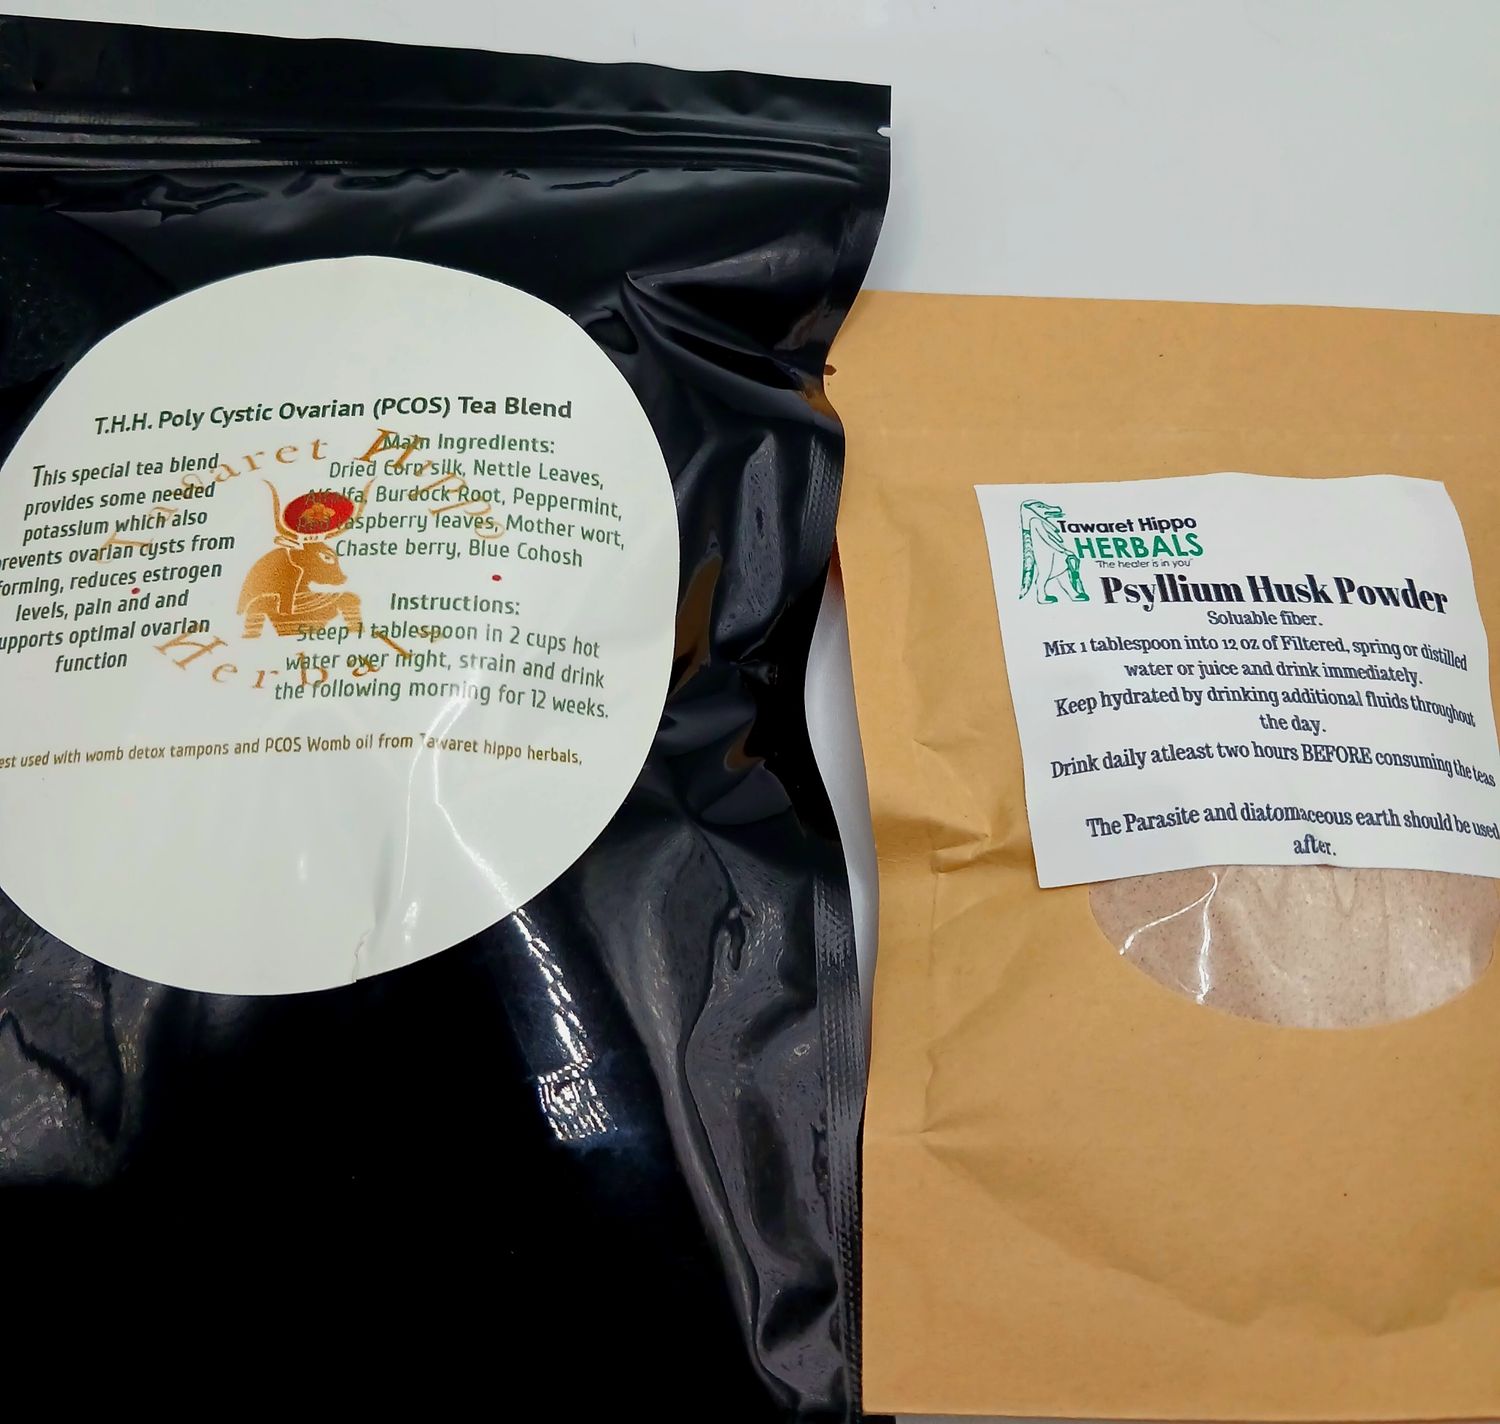 T.H.H Poly Cystic Ovaries ( PCOS) loose leaf tea with Psyllium Husk powder.